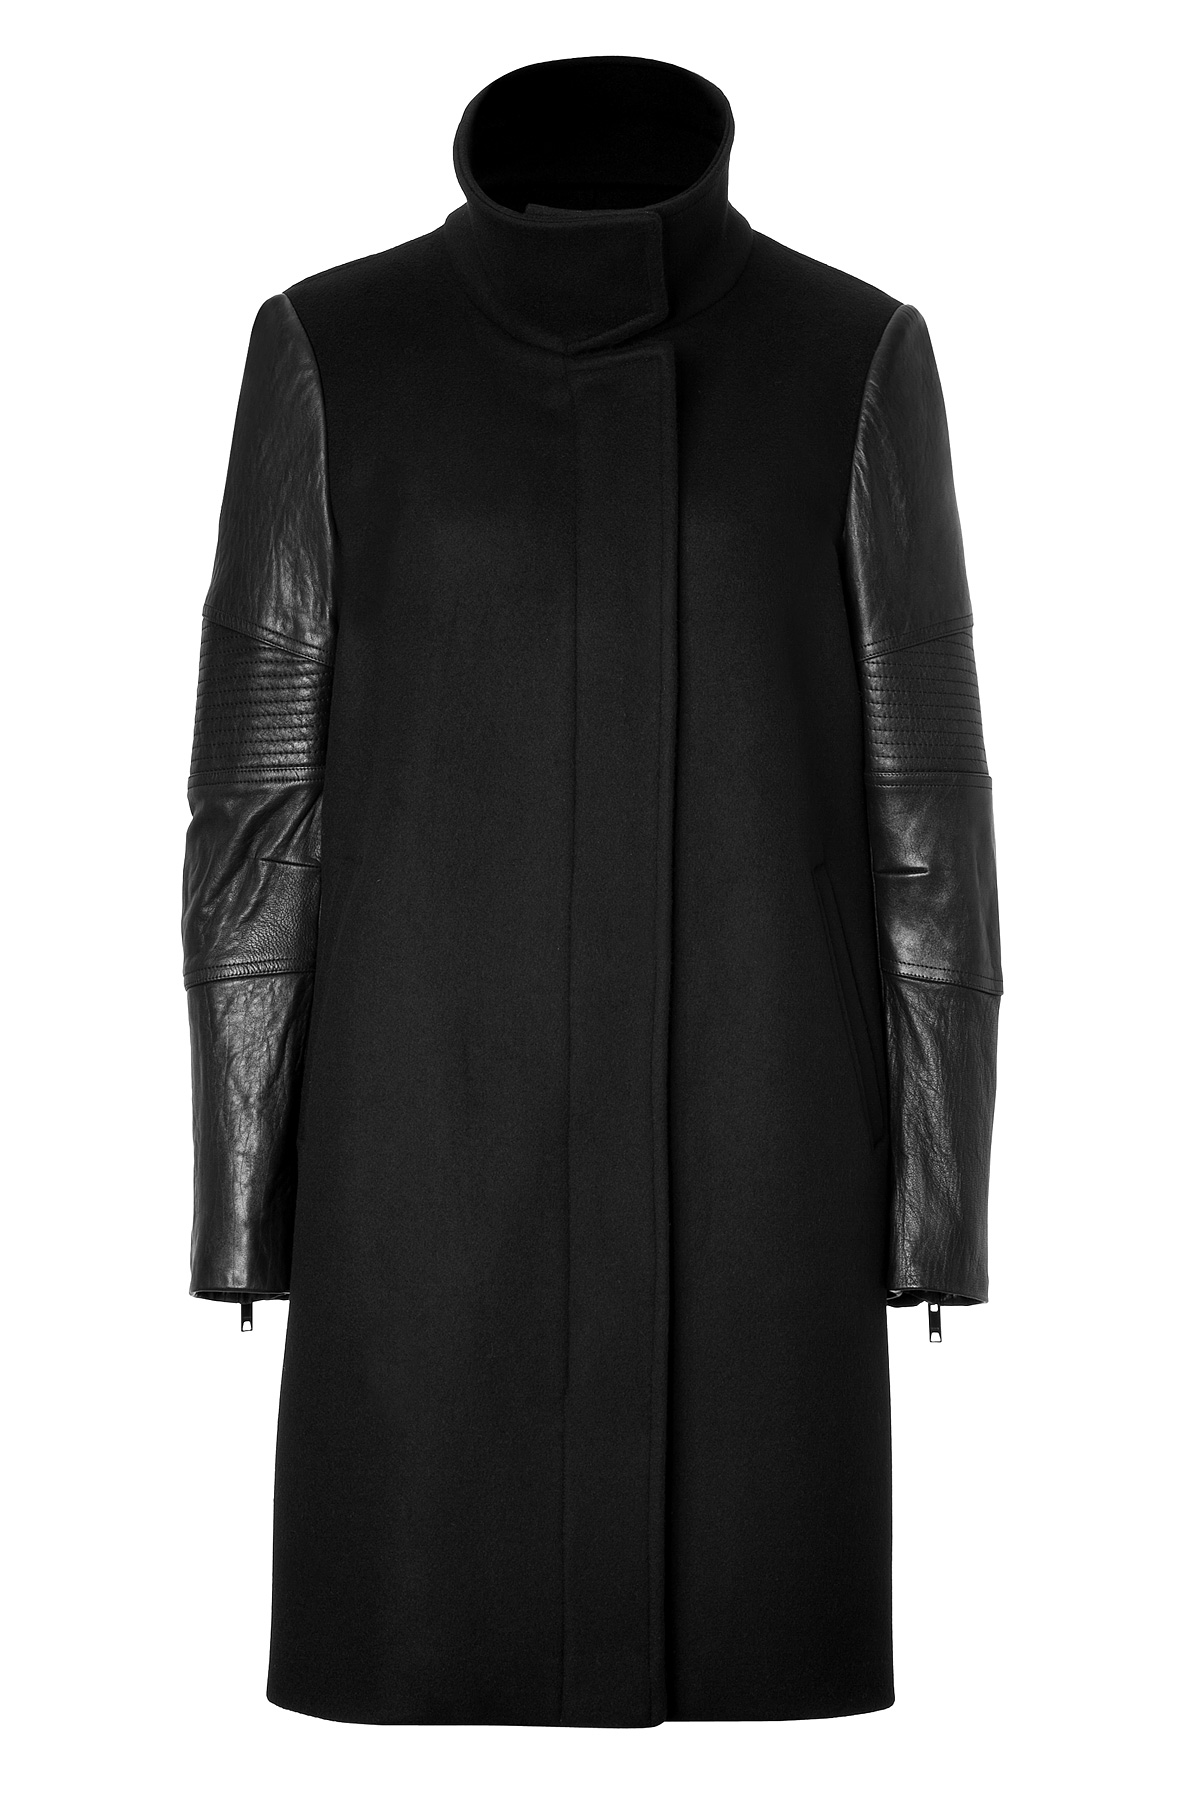 Lyst - Dkny Wool Coat in Black in Black